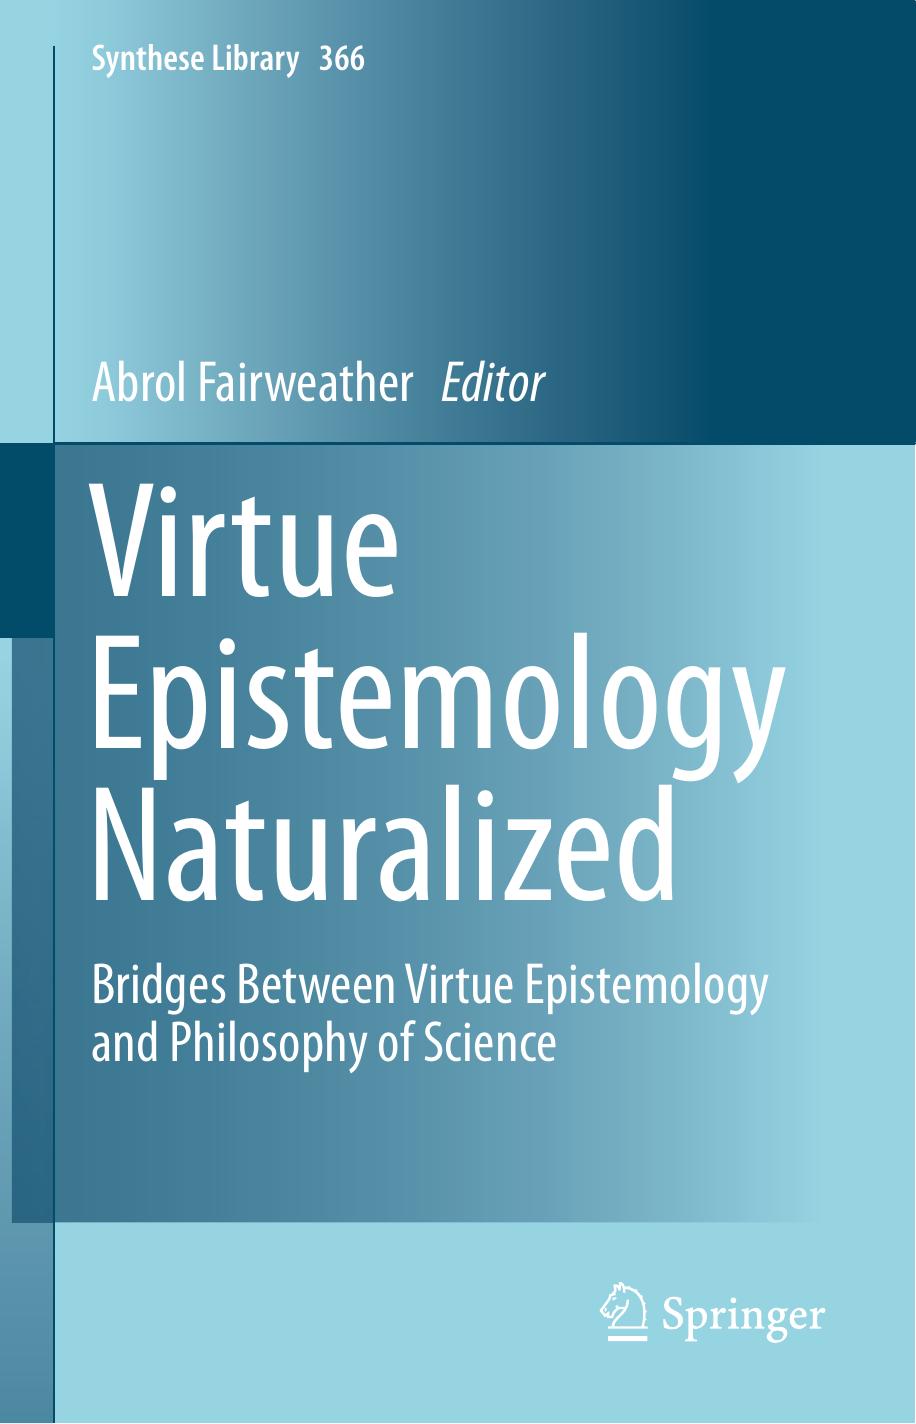 Virtue Epistemology Naturalized: Bridges Between Virtue Epistemology and Philosophy of Science